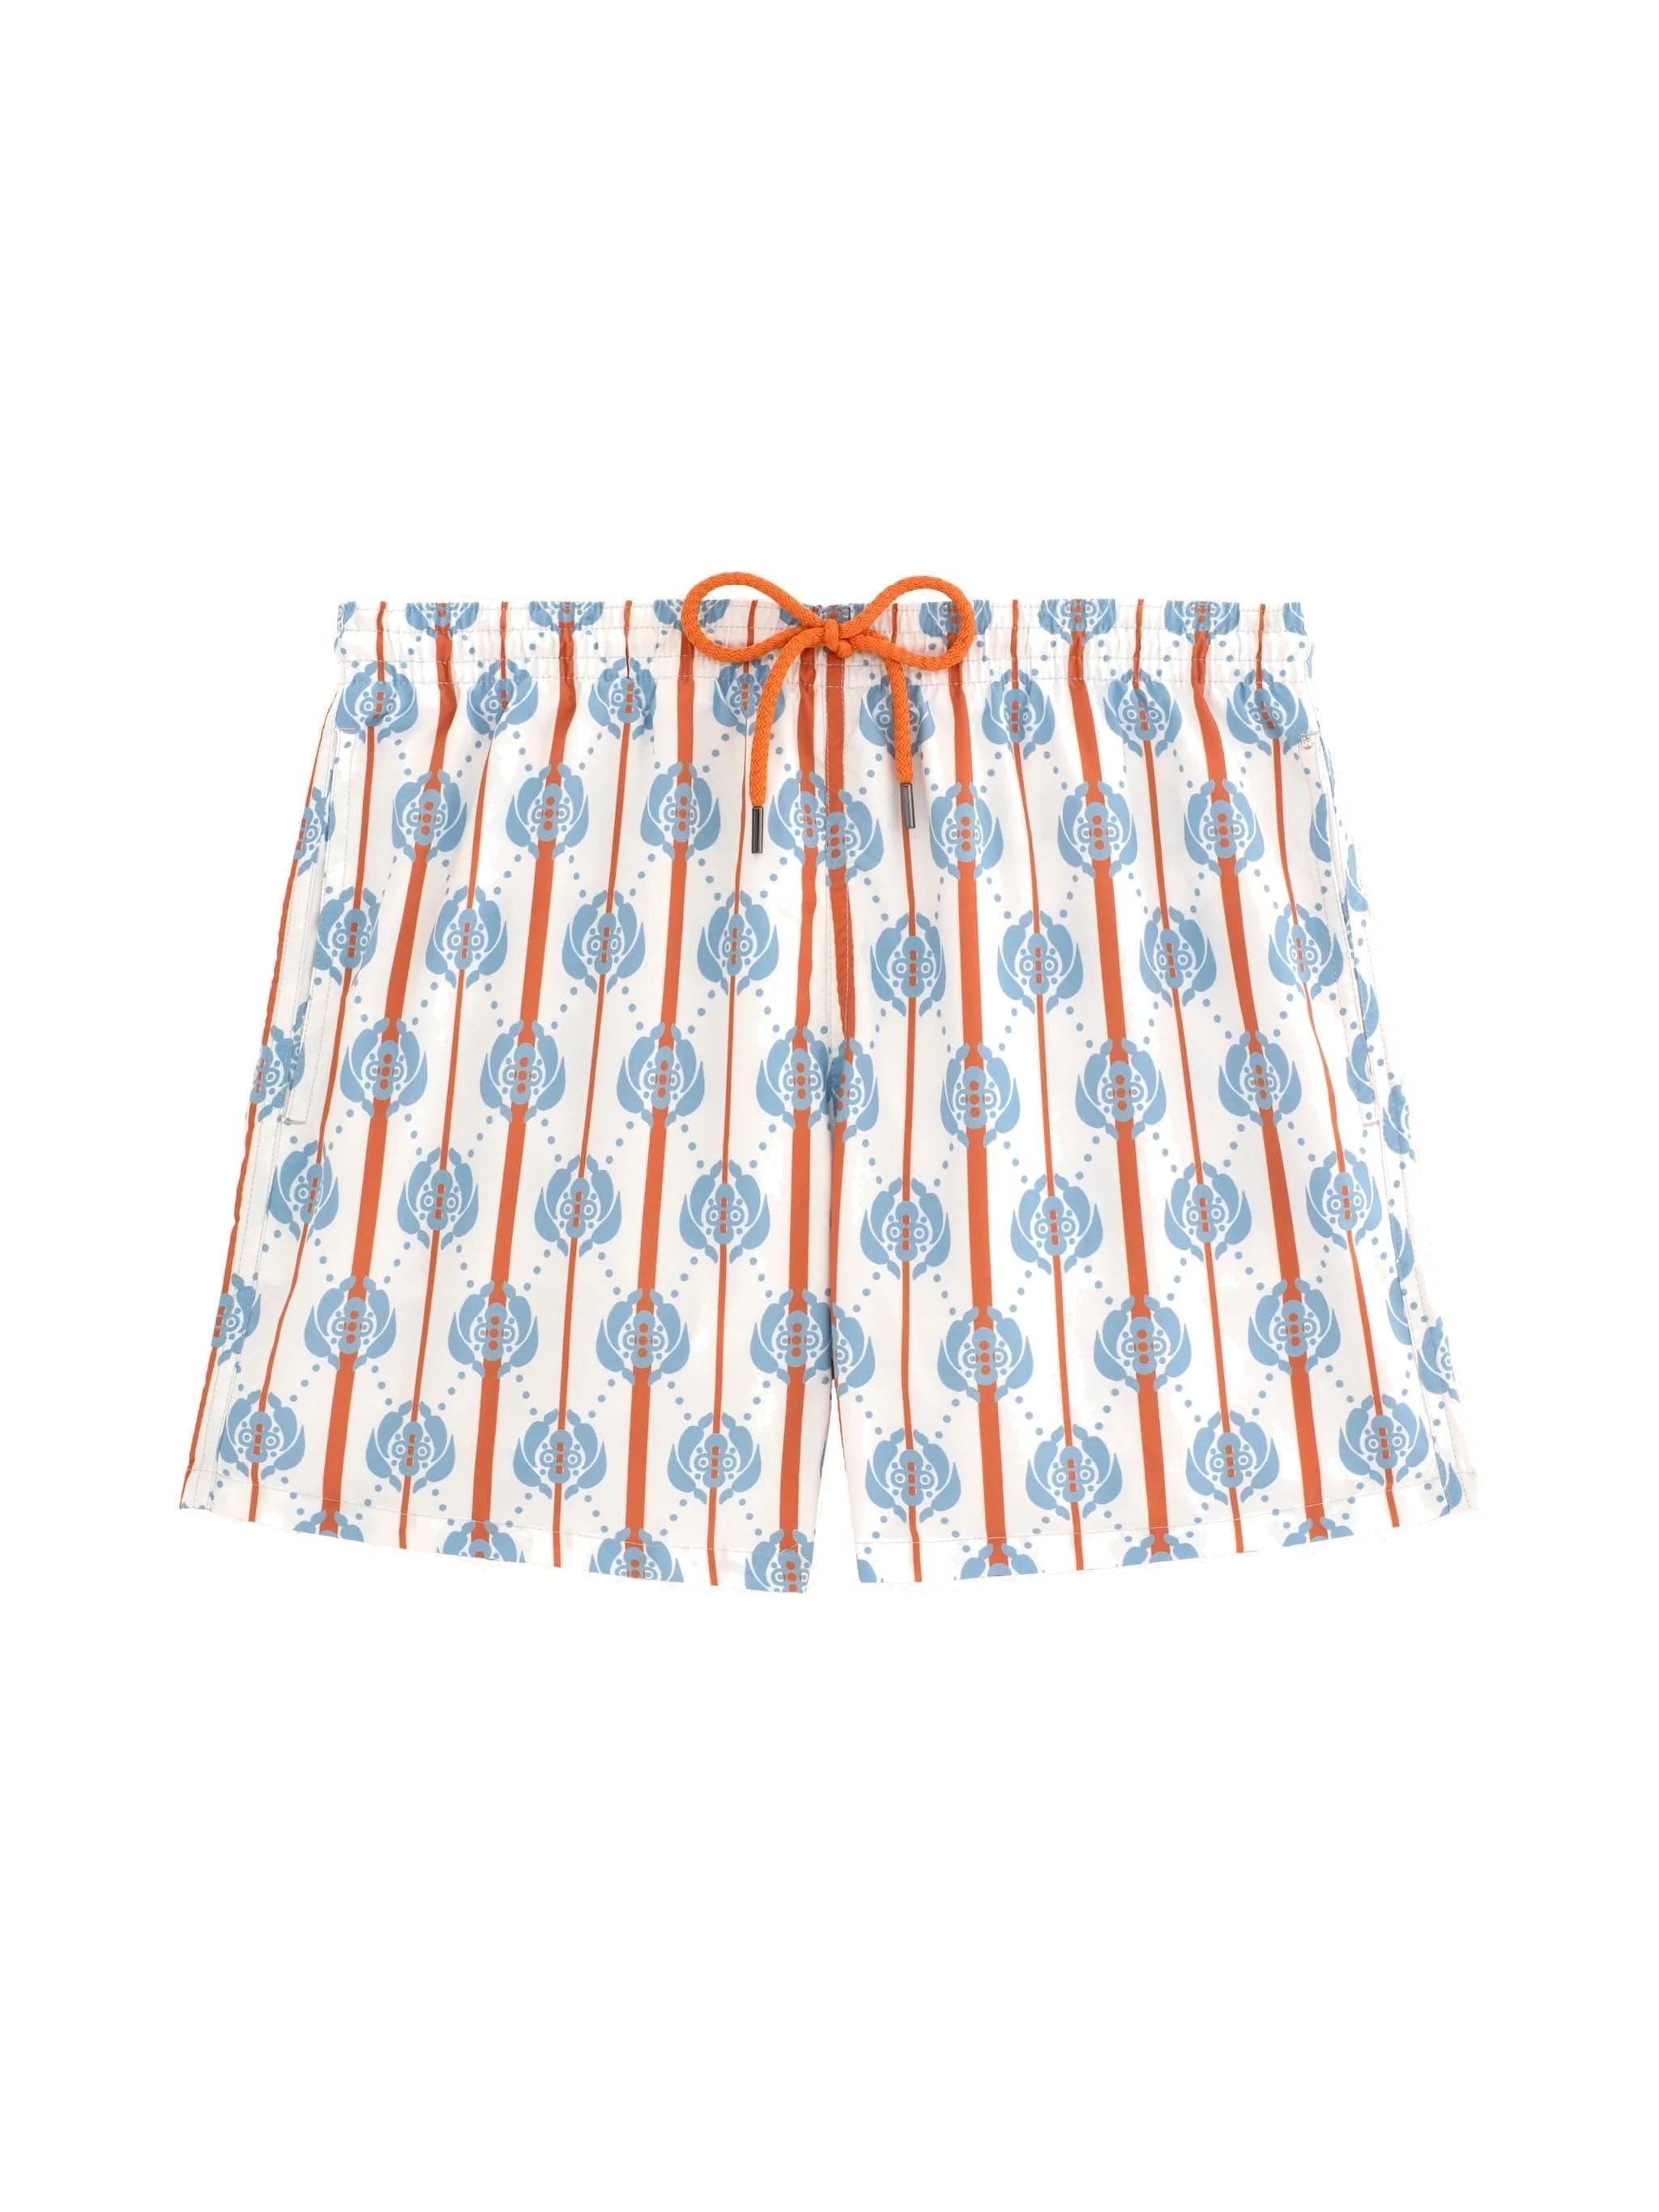 White and Orange Cognoscenti Swim Shorts